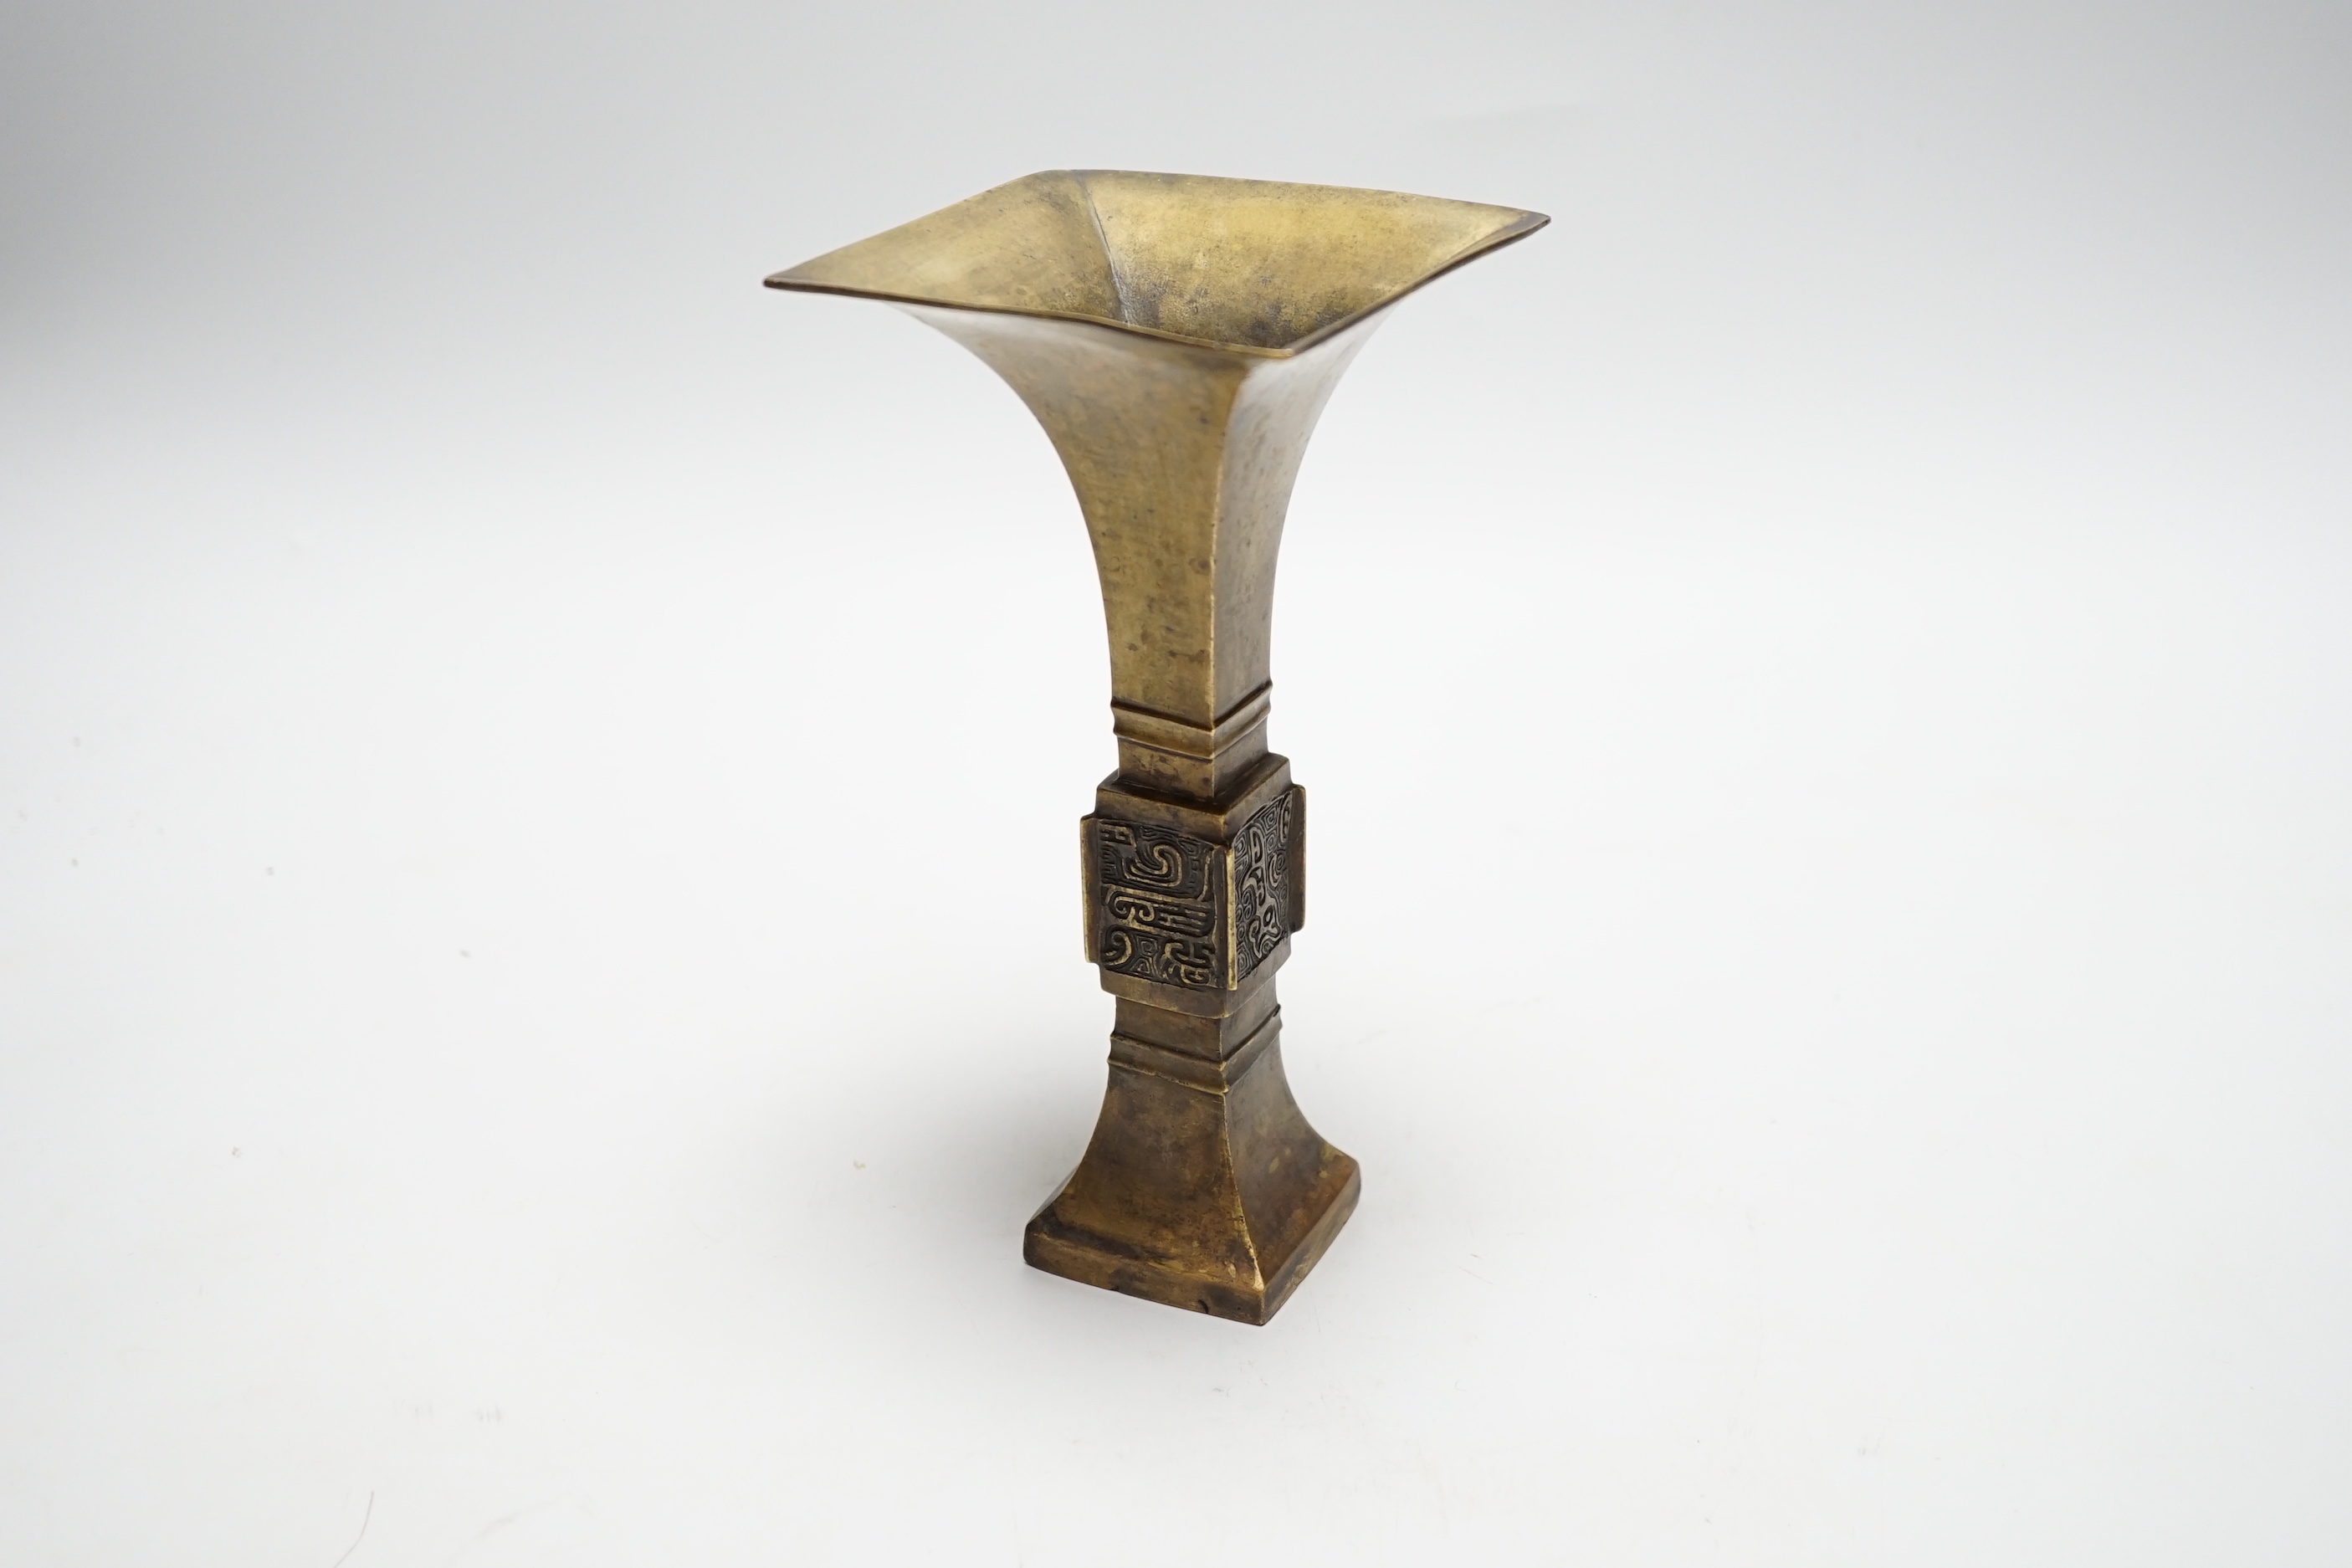 An 18th/19th century Chinese archaistic bronze fanggu vase, 20cm